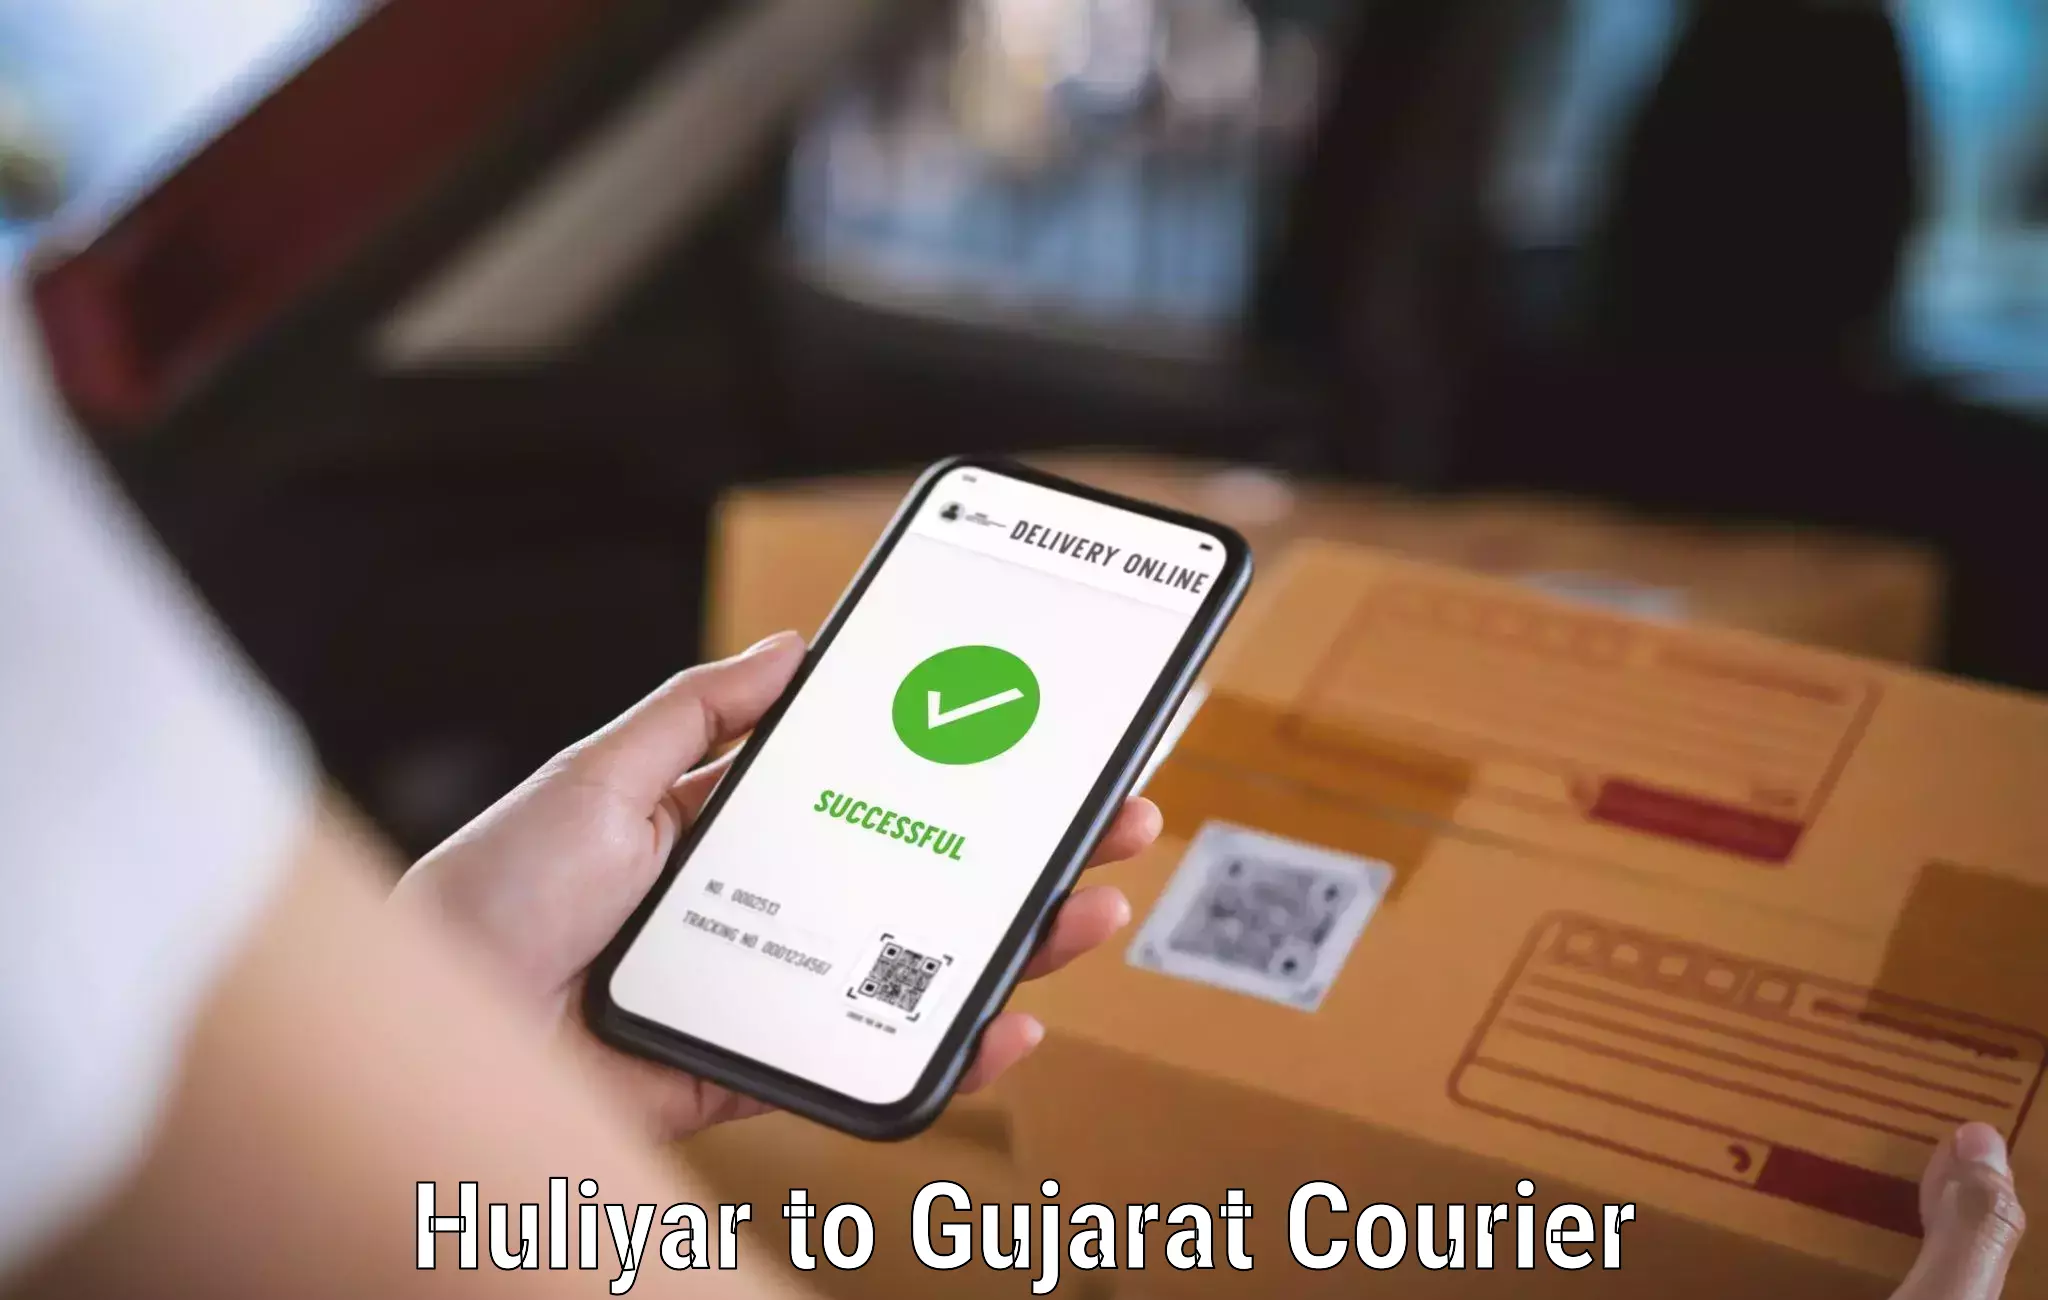 Courier service comparison Huliyar to Porbandar